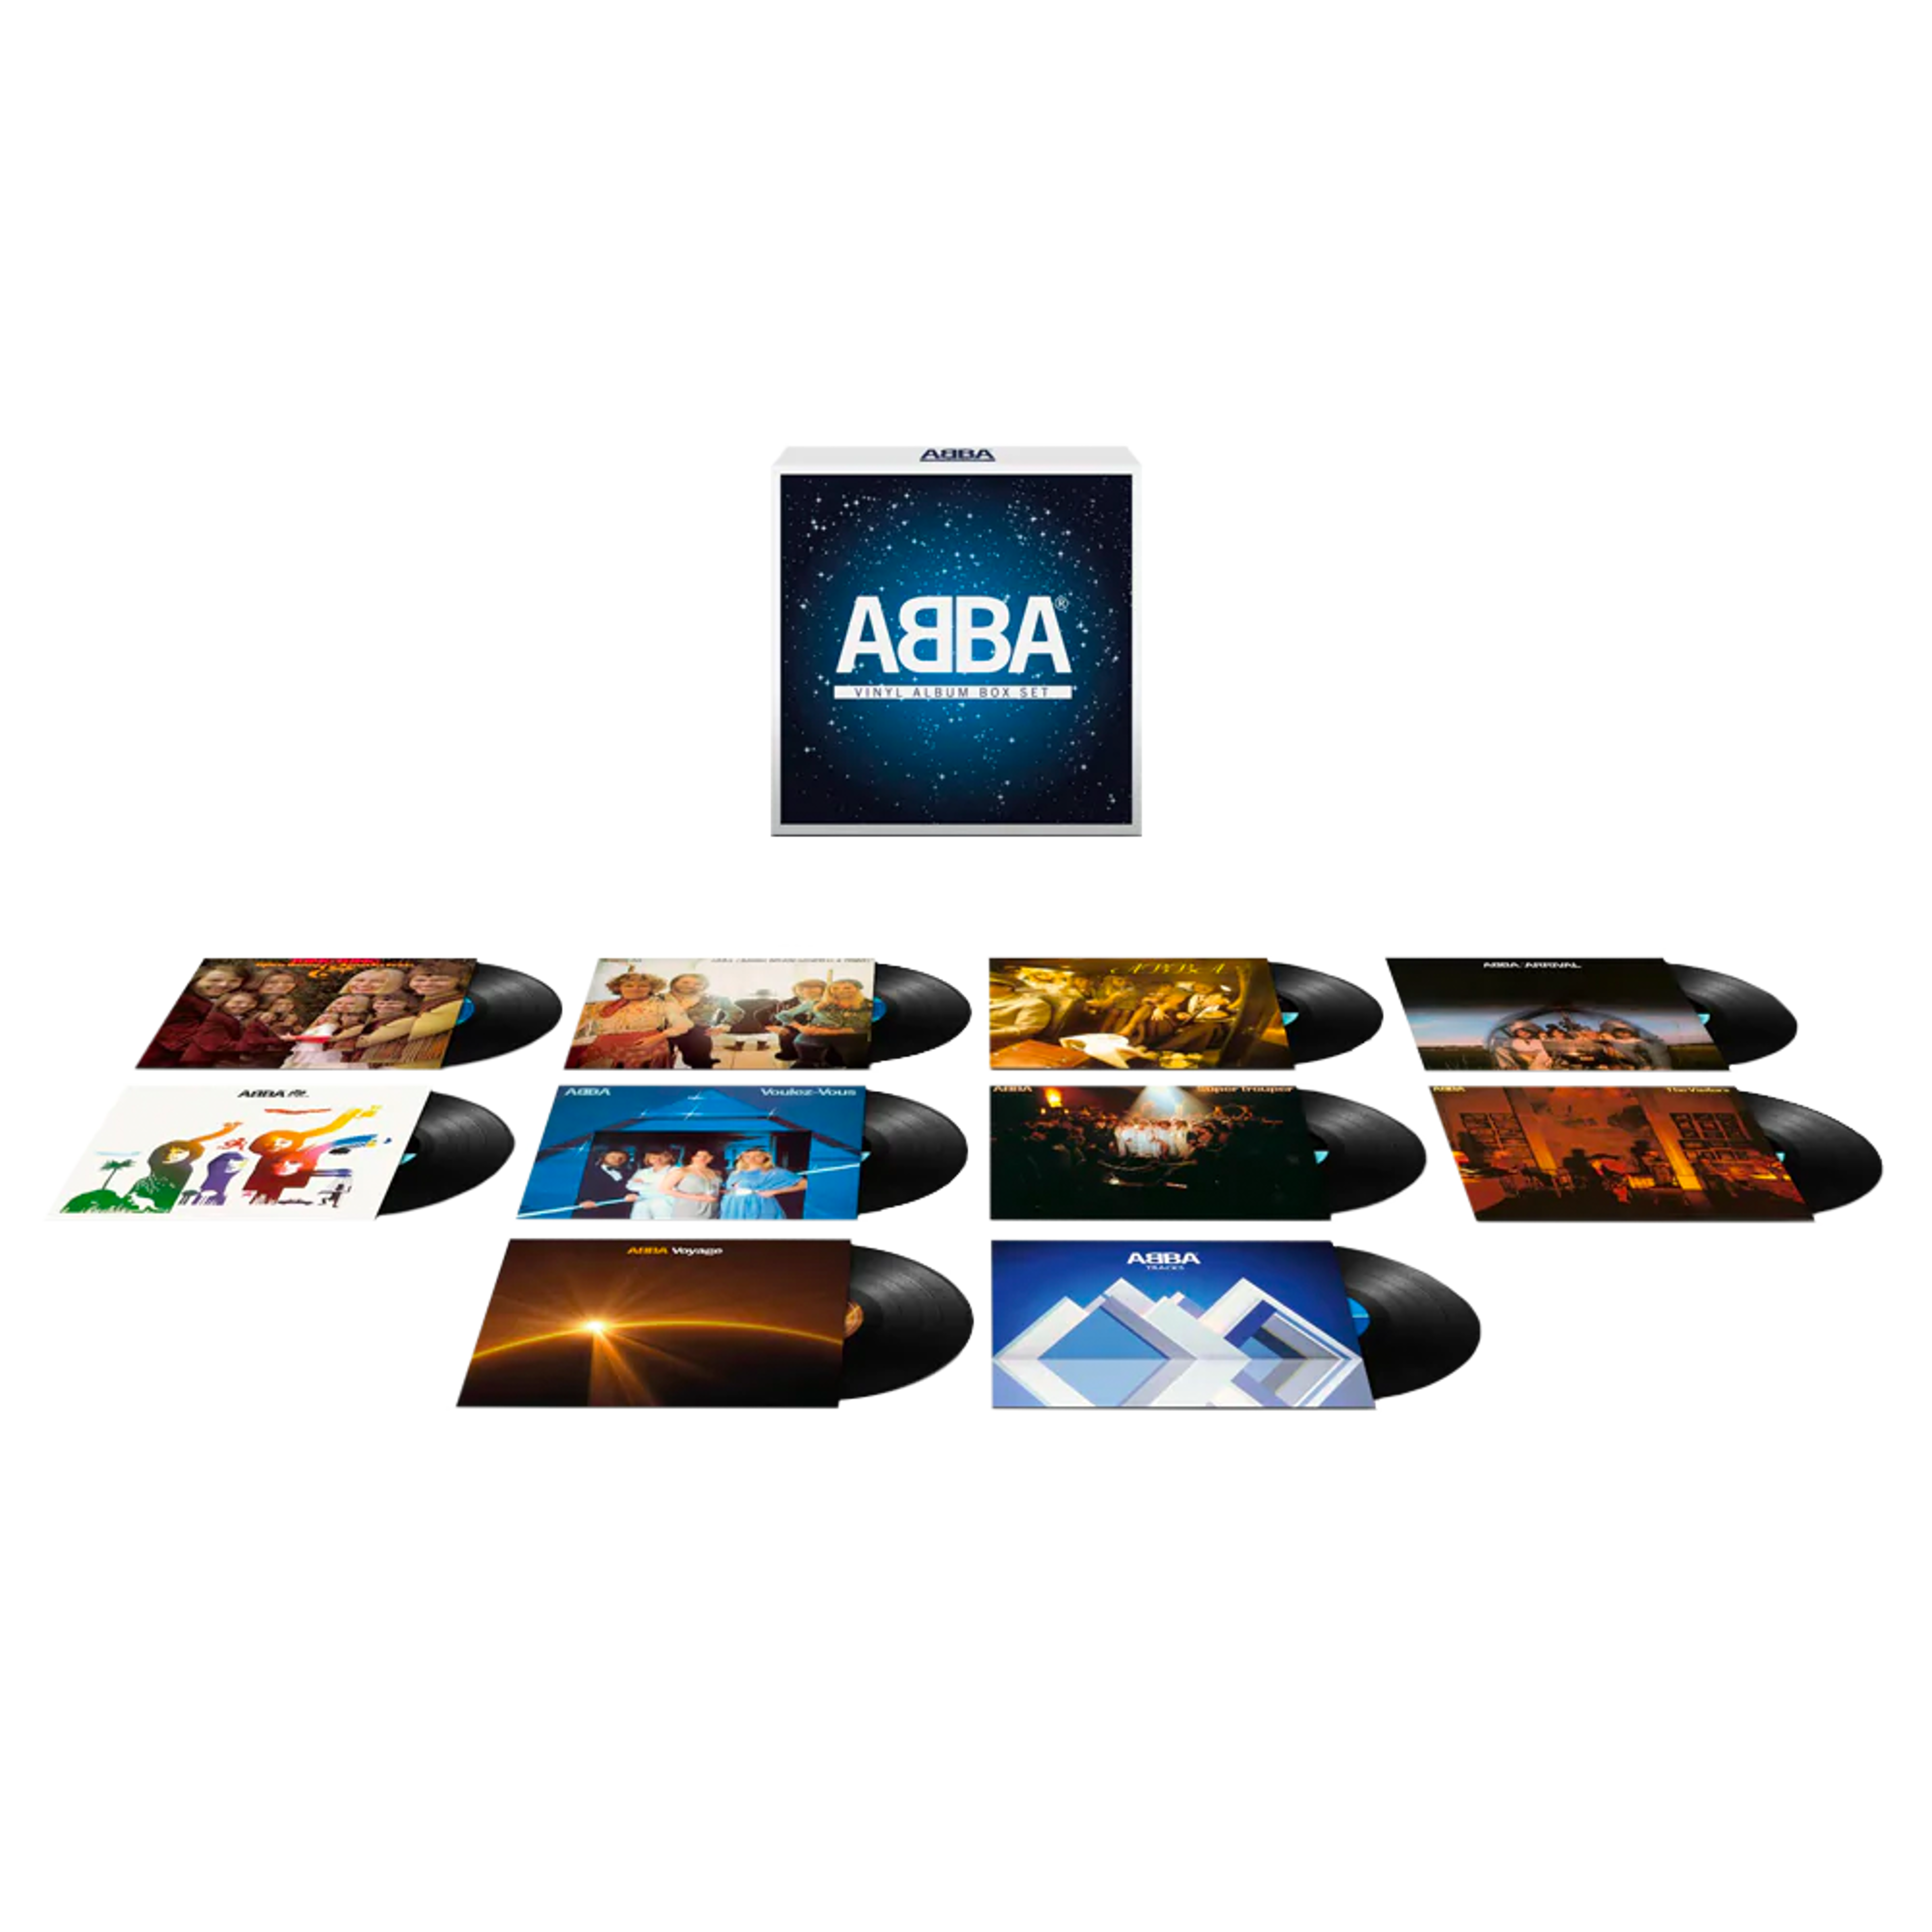 ABBA - 10 LP Album Boxset